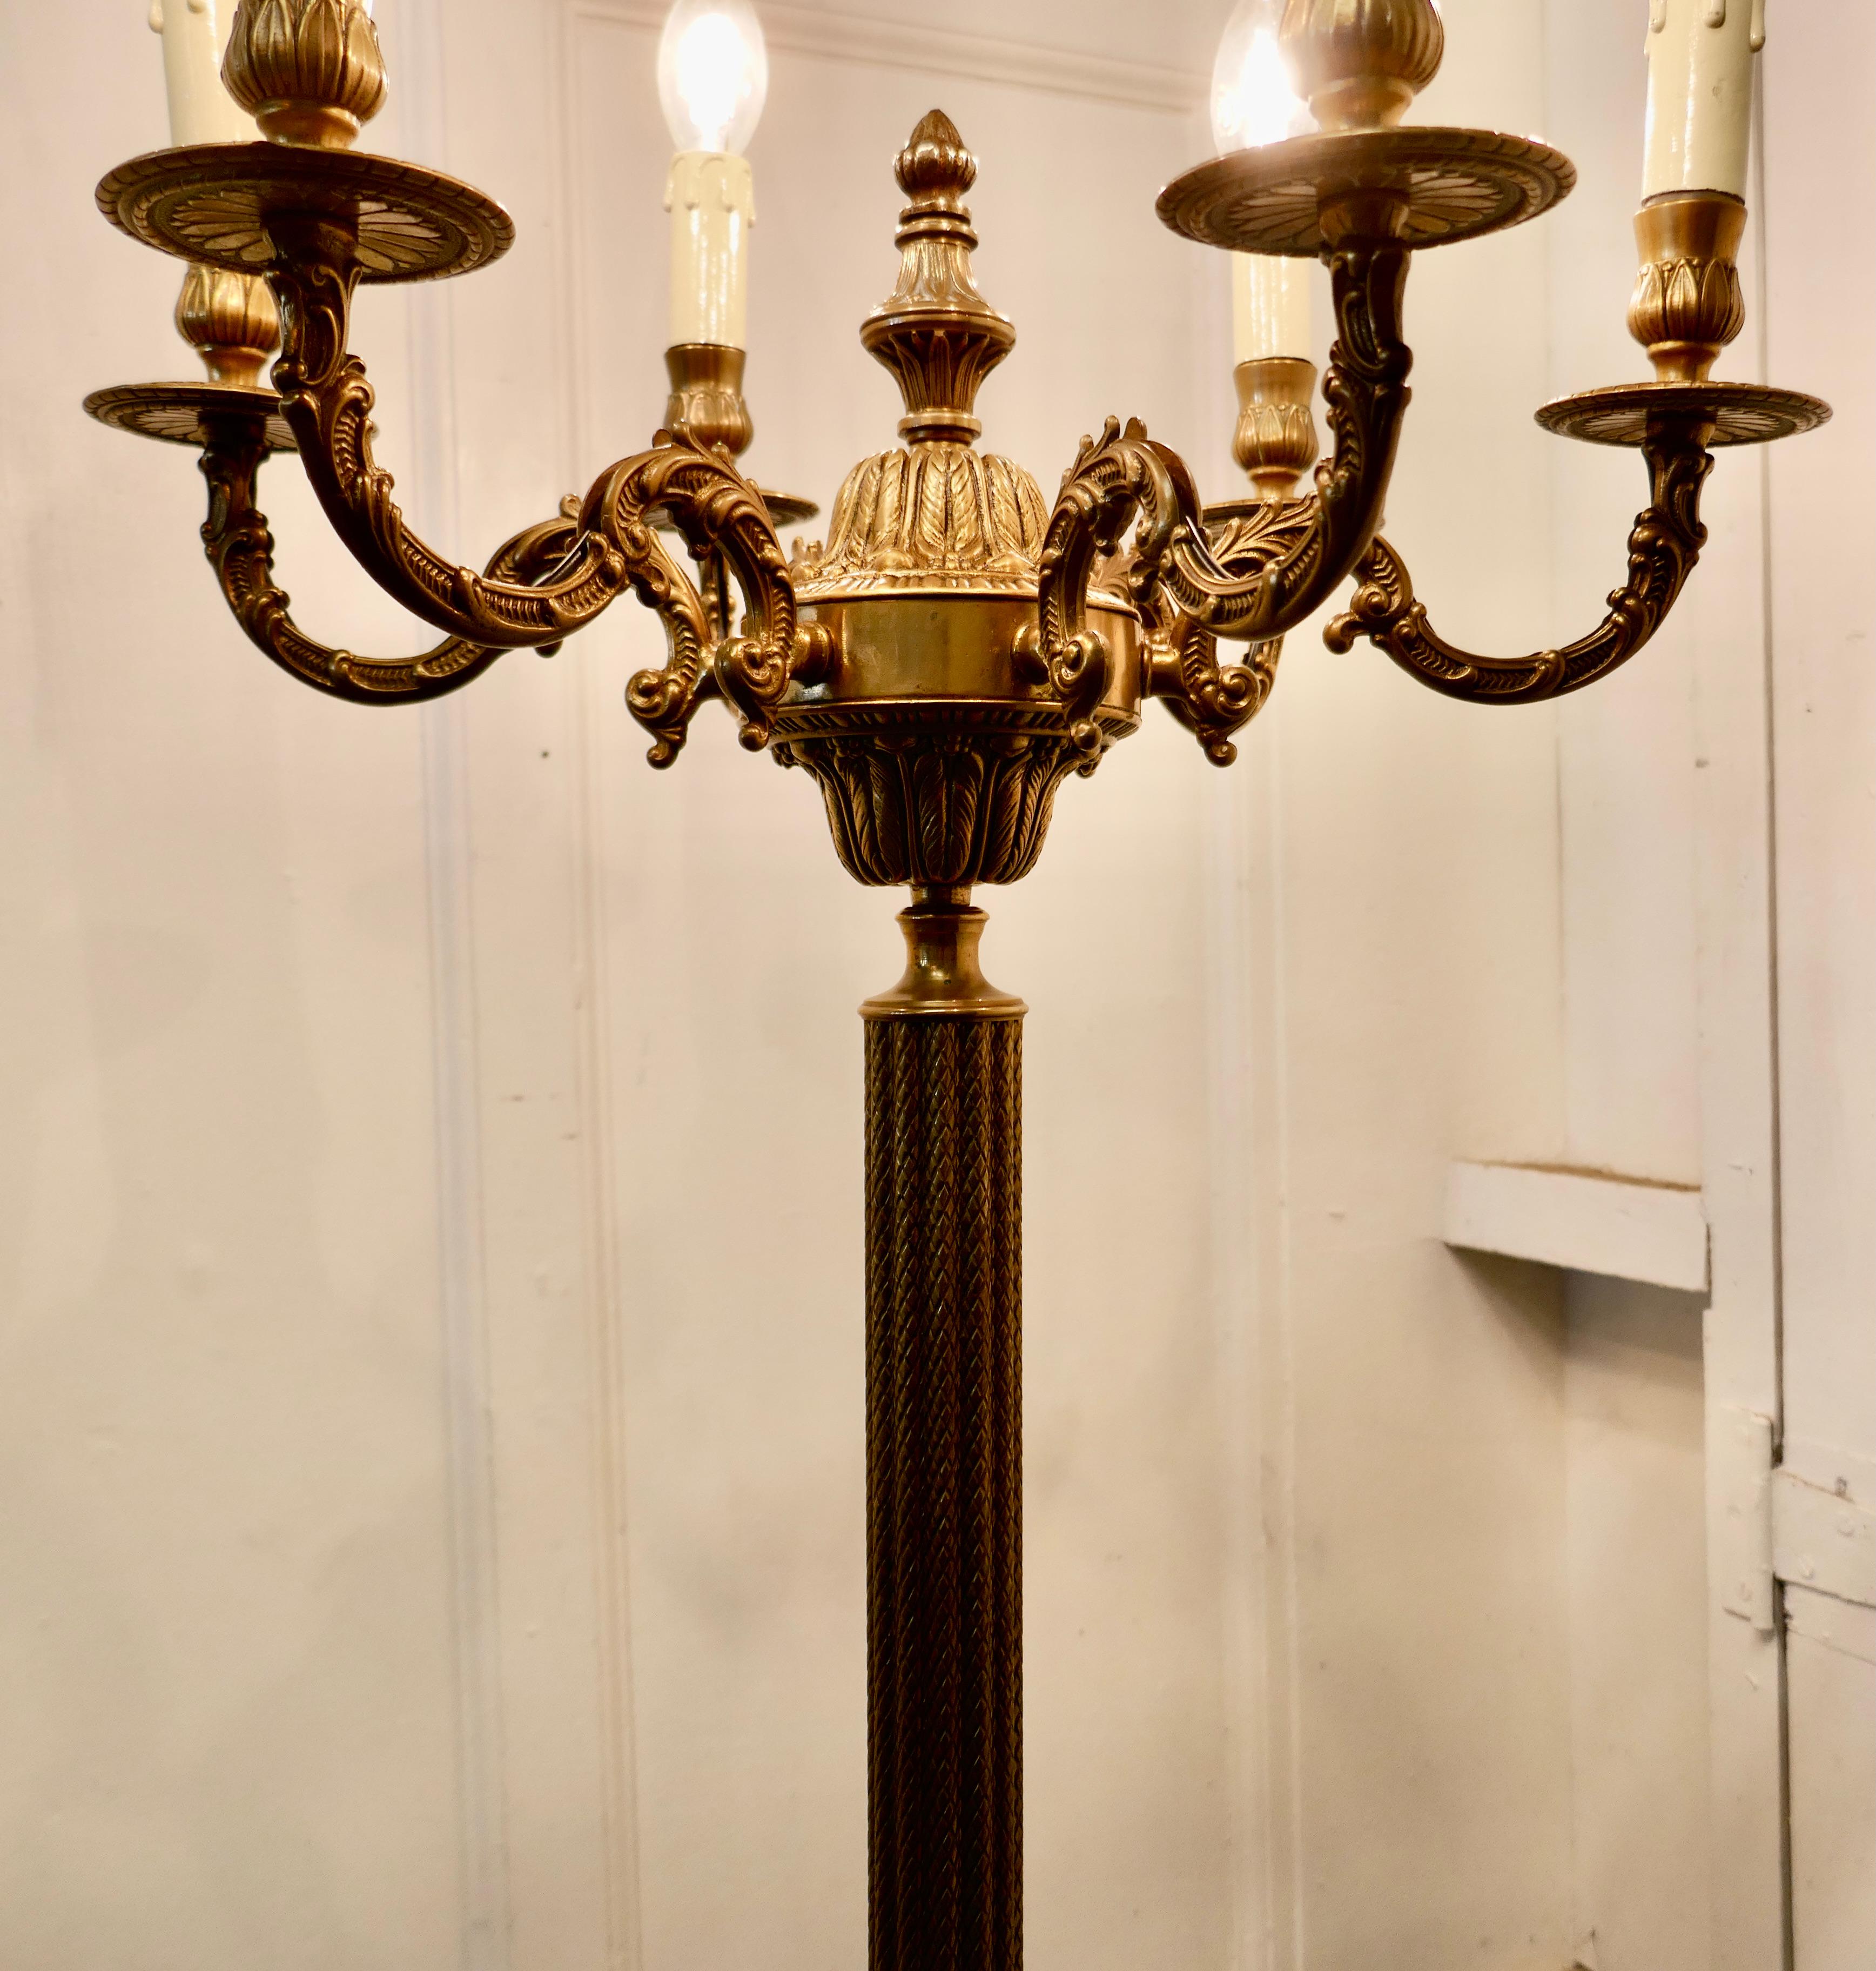 20th Century Rococo Gilt Brass Candelabra 6 Branch Floor Lamp, Standard Lamp